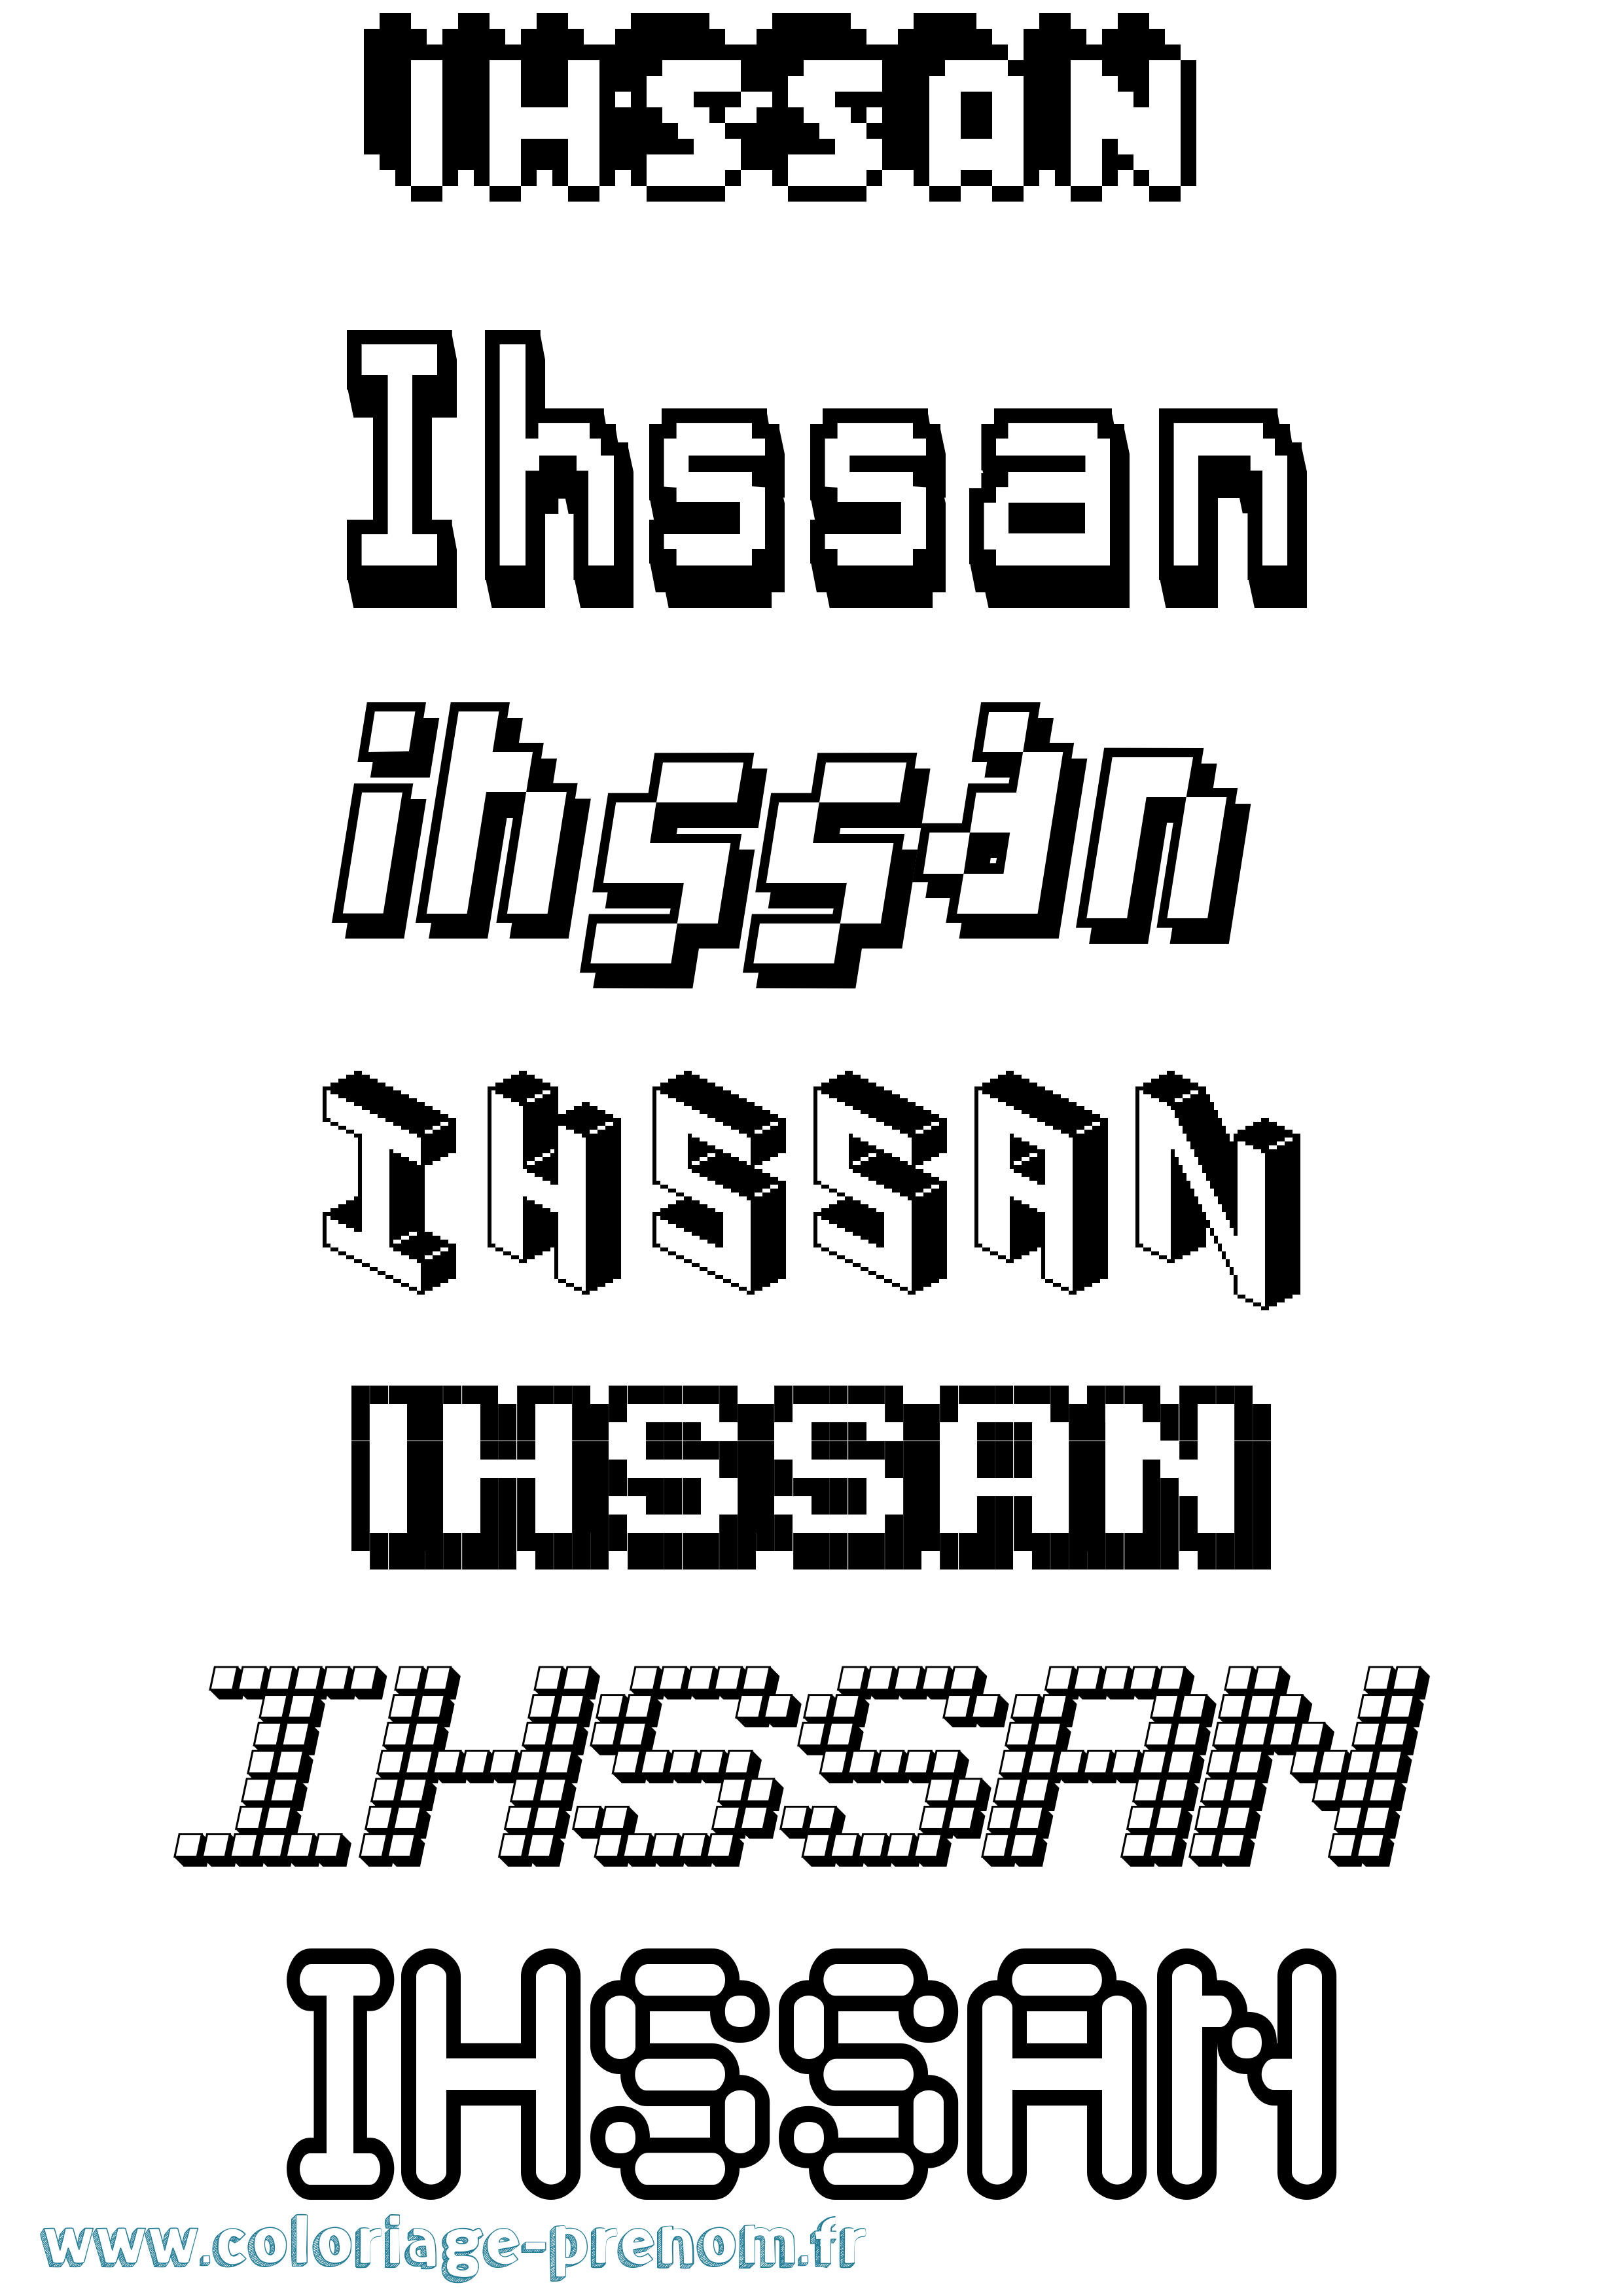 Coloriage prénom Ihssan Pixel